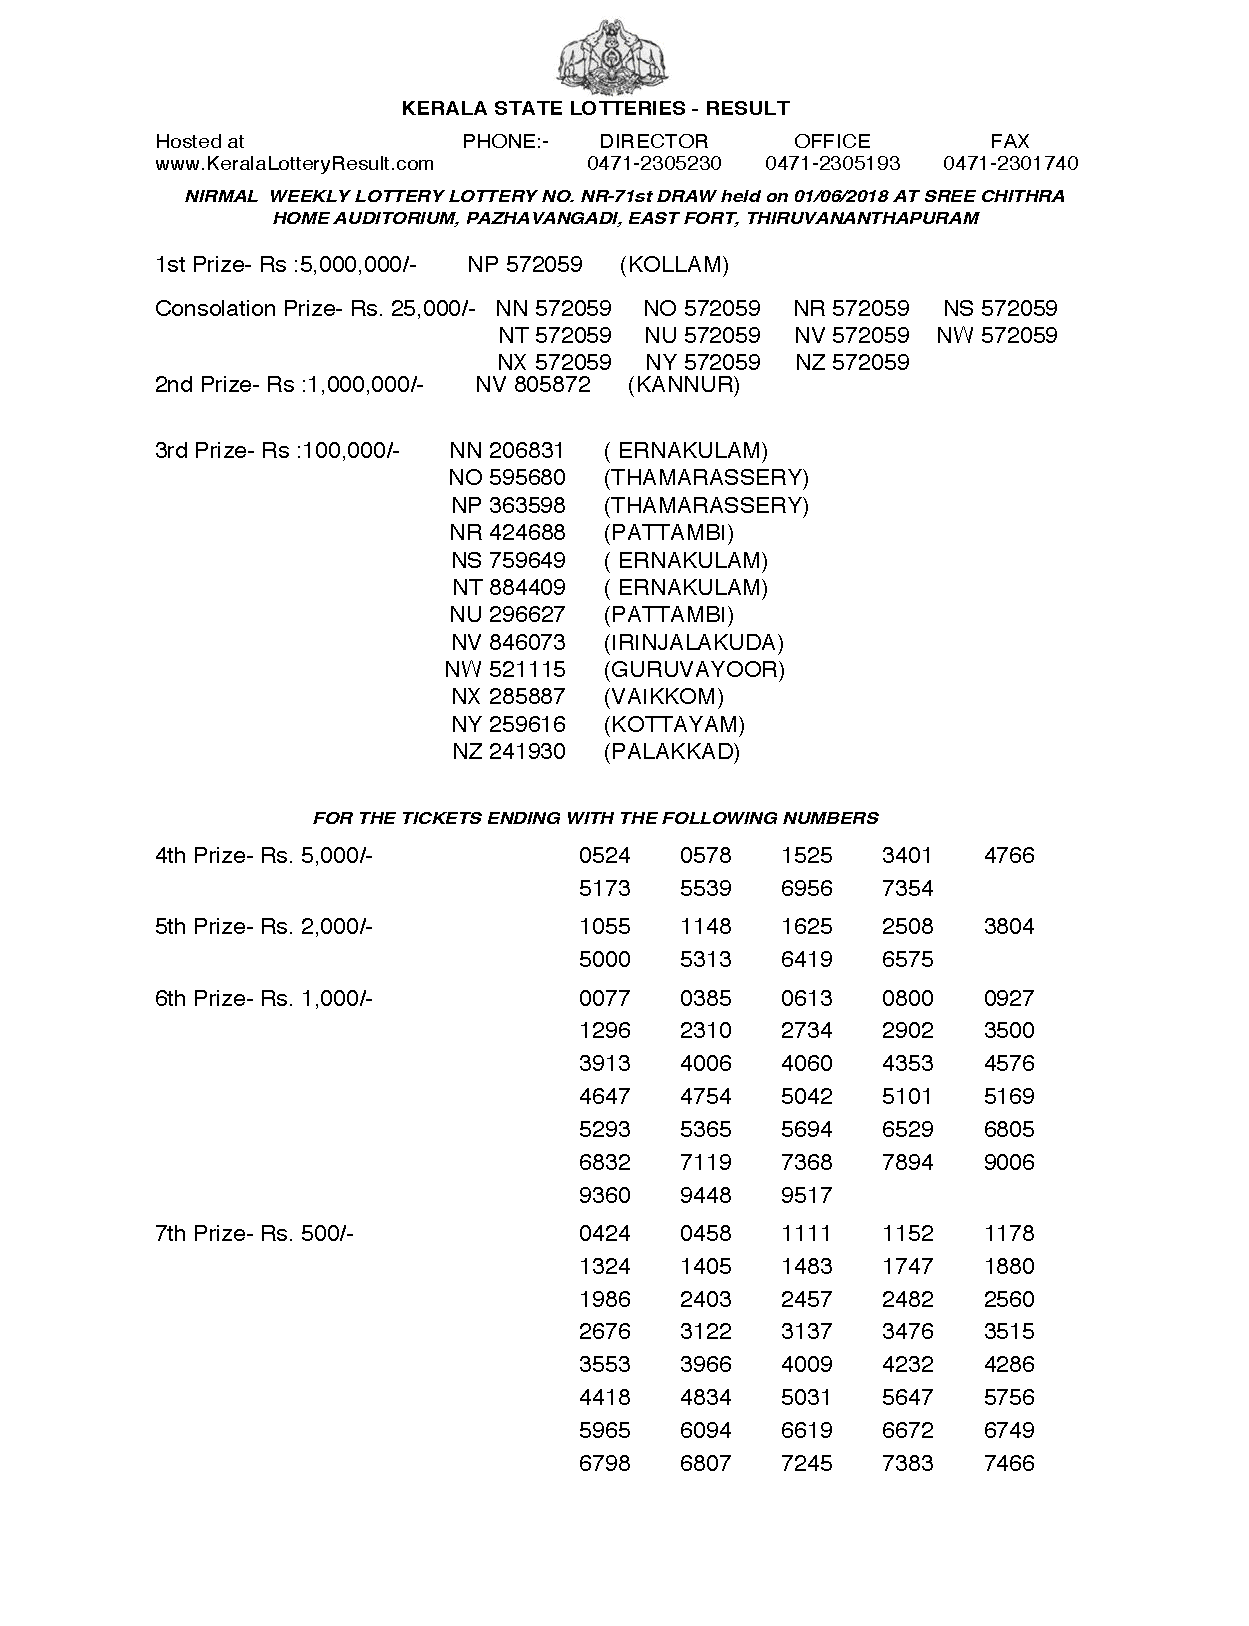 NR71 Kerala Lottery Results Screenshot: Page 1